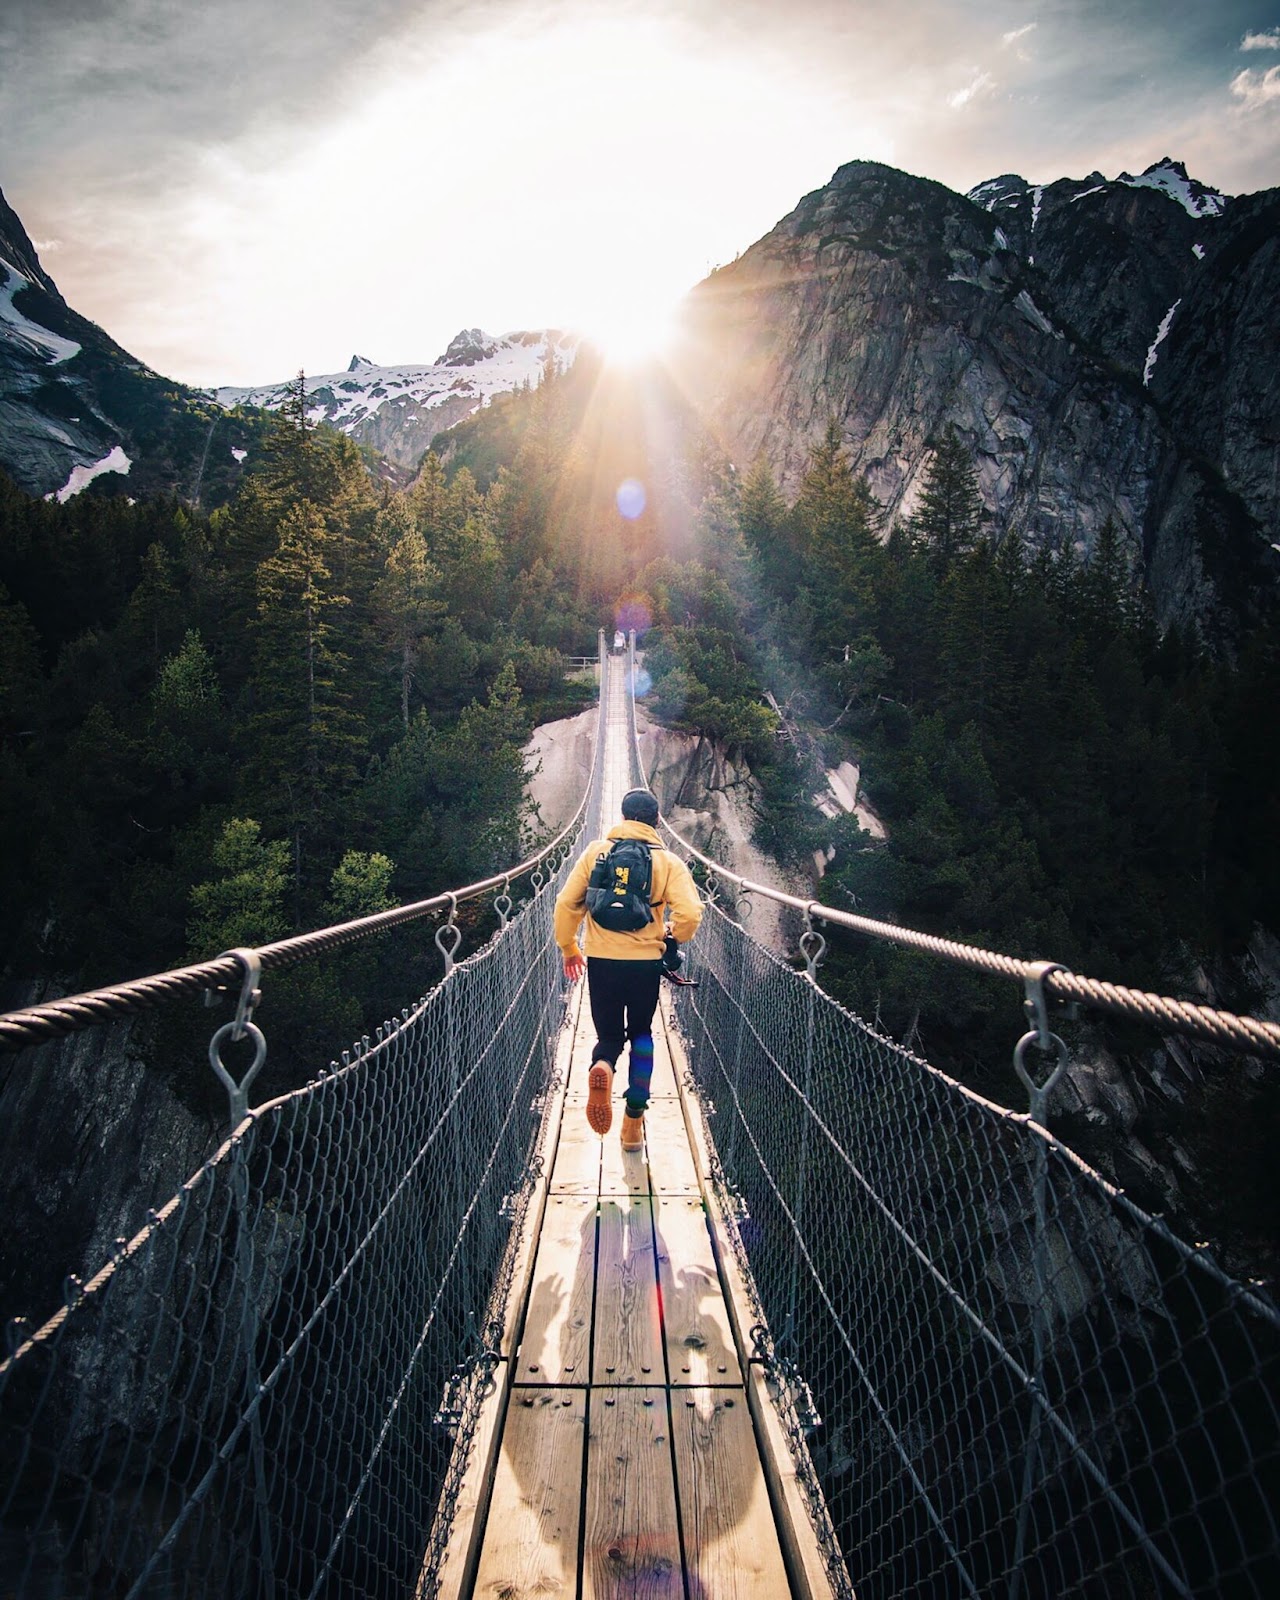 Swinging bridge in the mountains